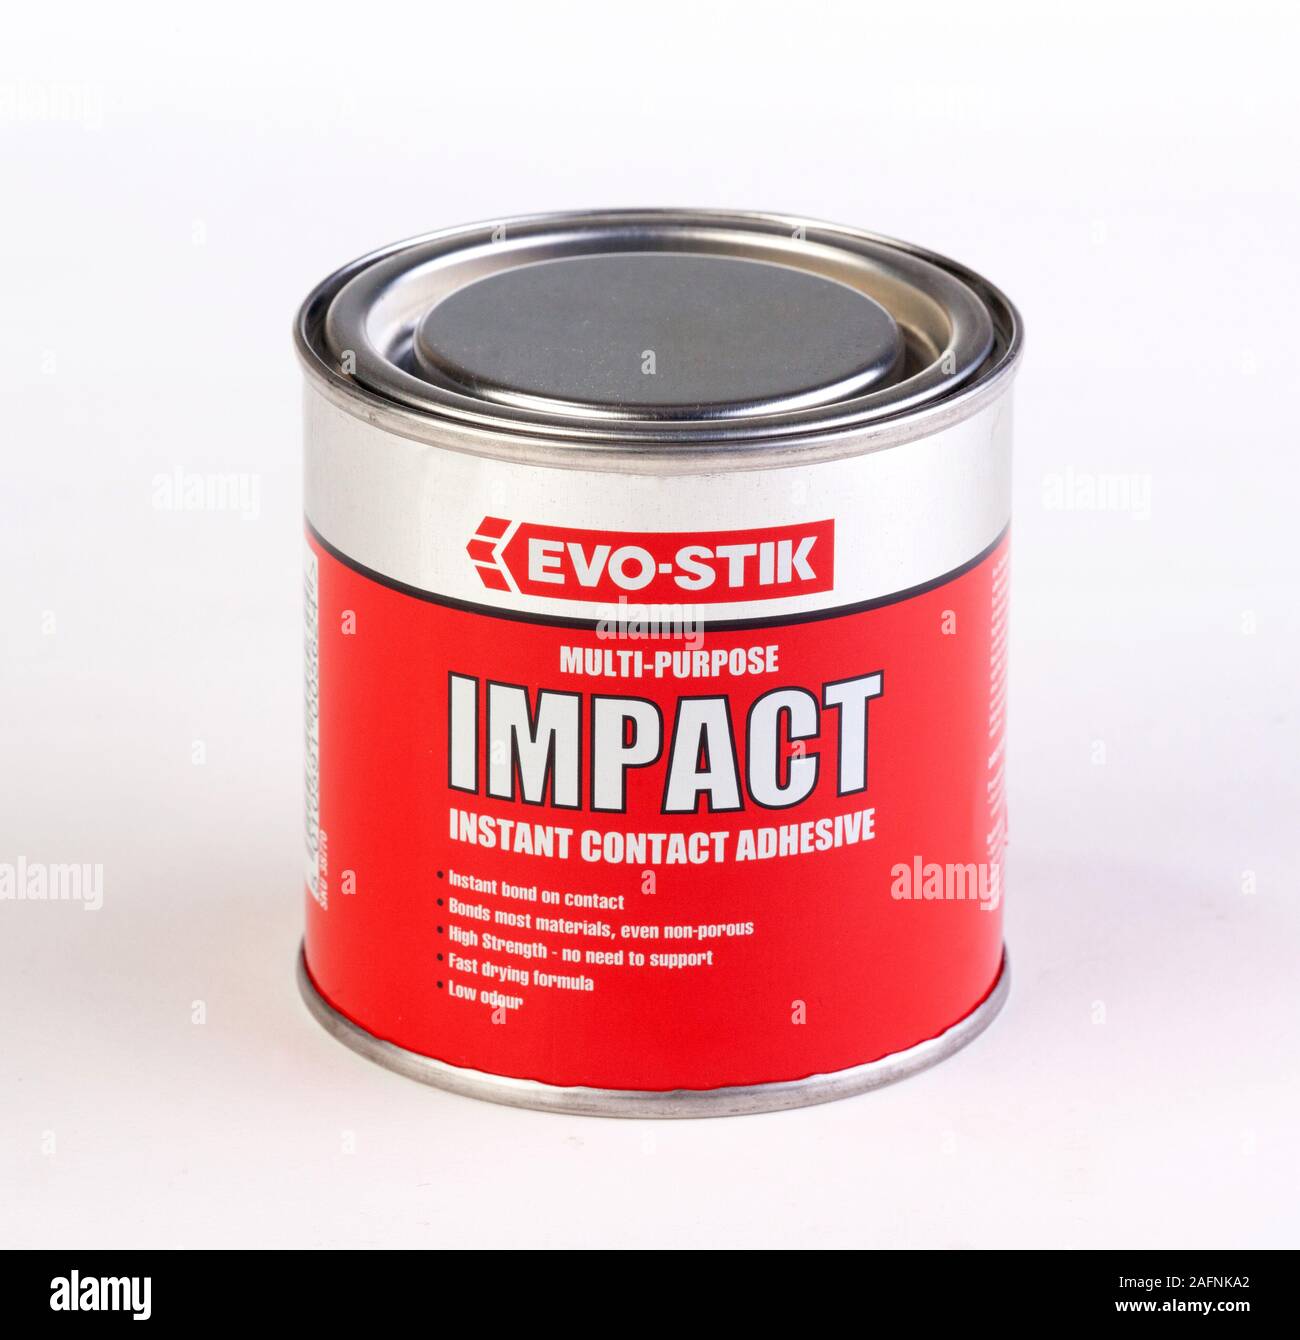 Evo Stick contact adhesive Stock Photo